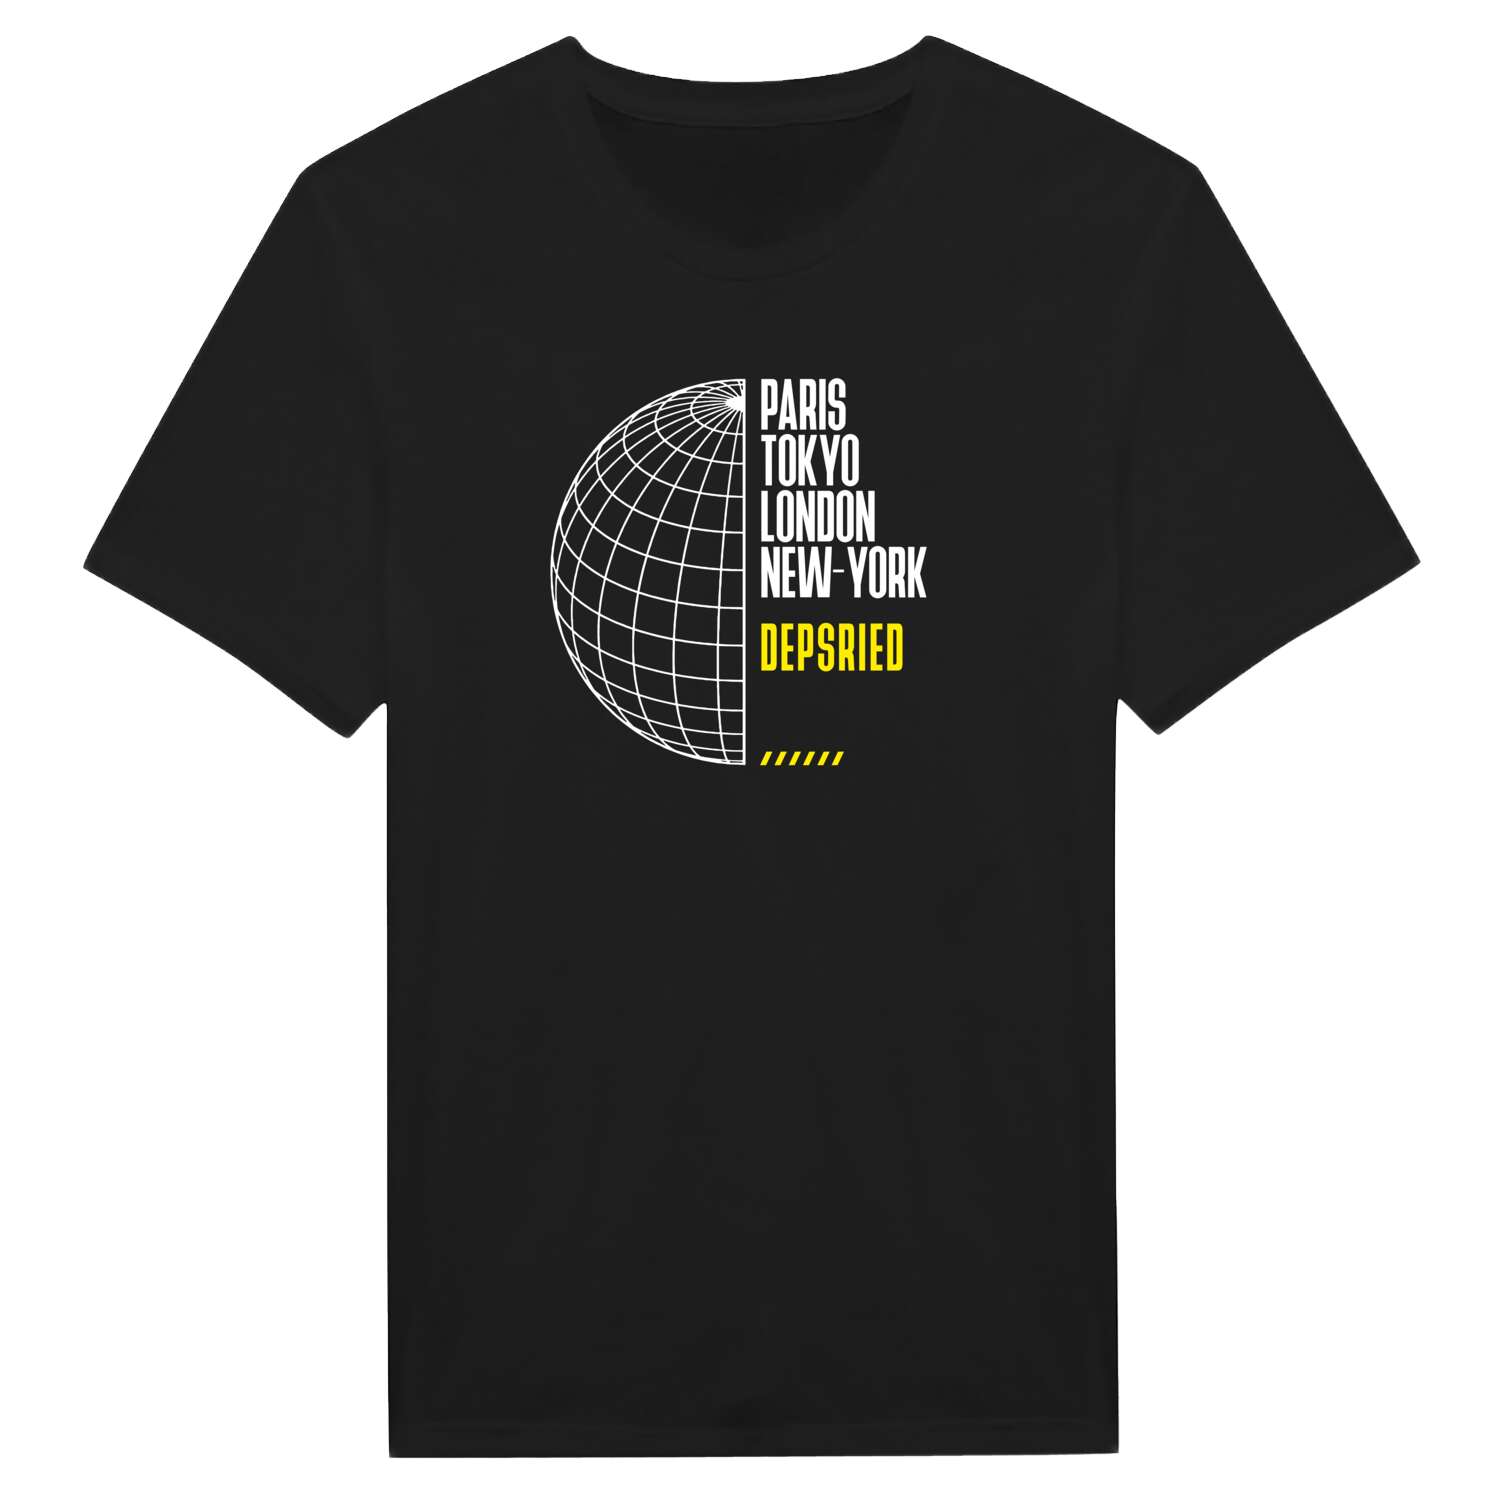 Depsried T-Shirt »Paris Tokyo London«